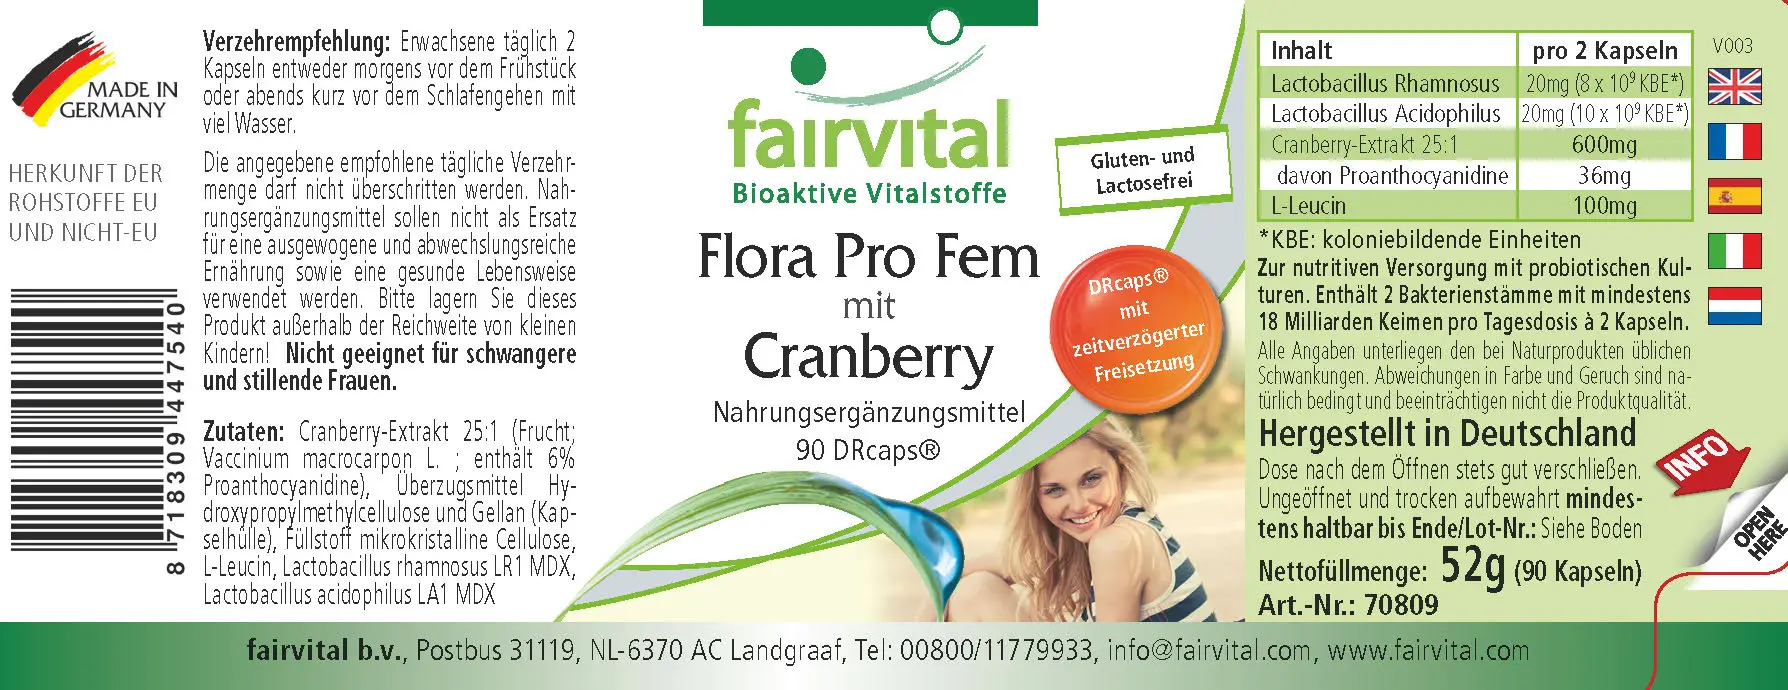 Flora Pro Fem mit Cranberry